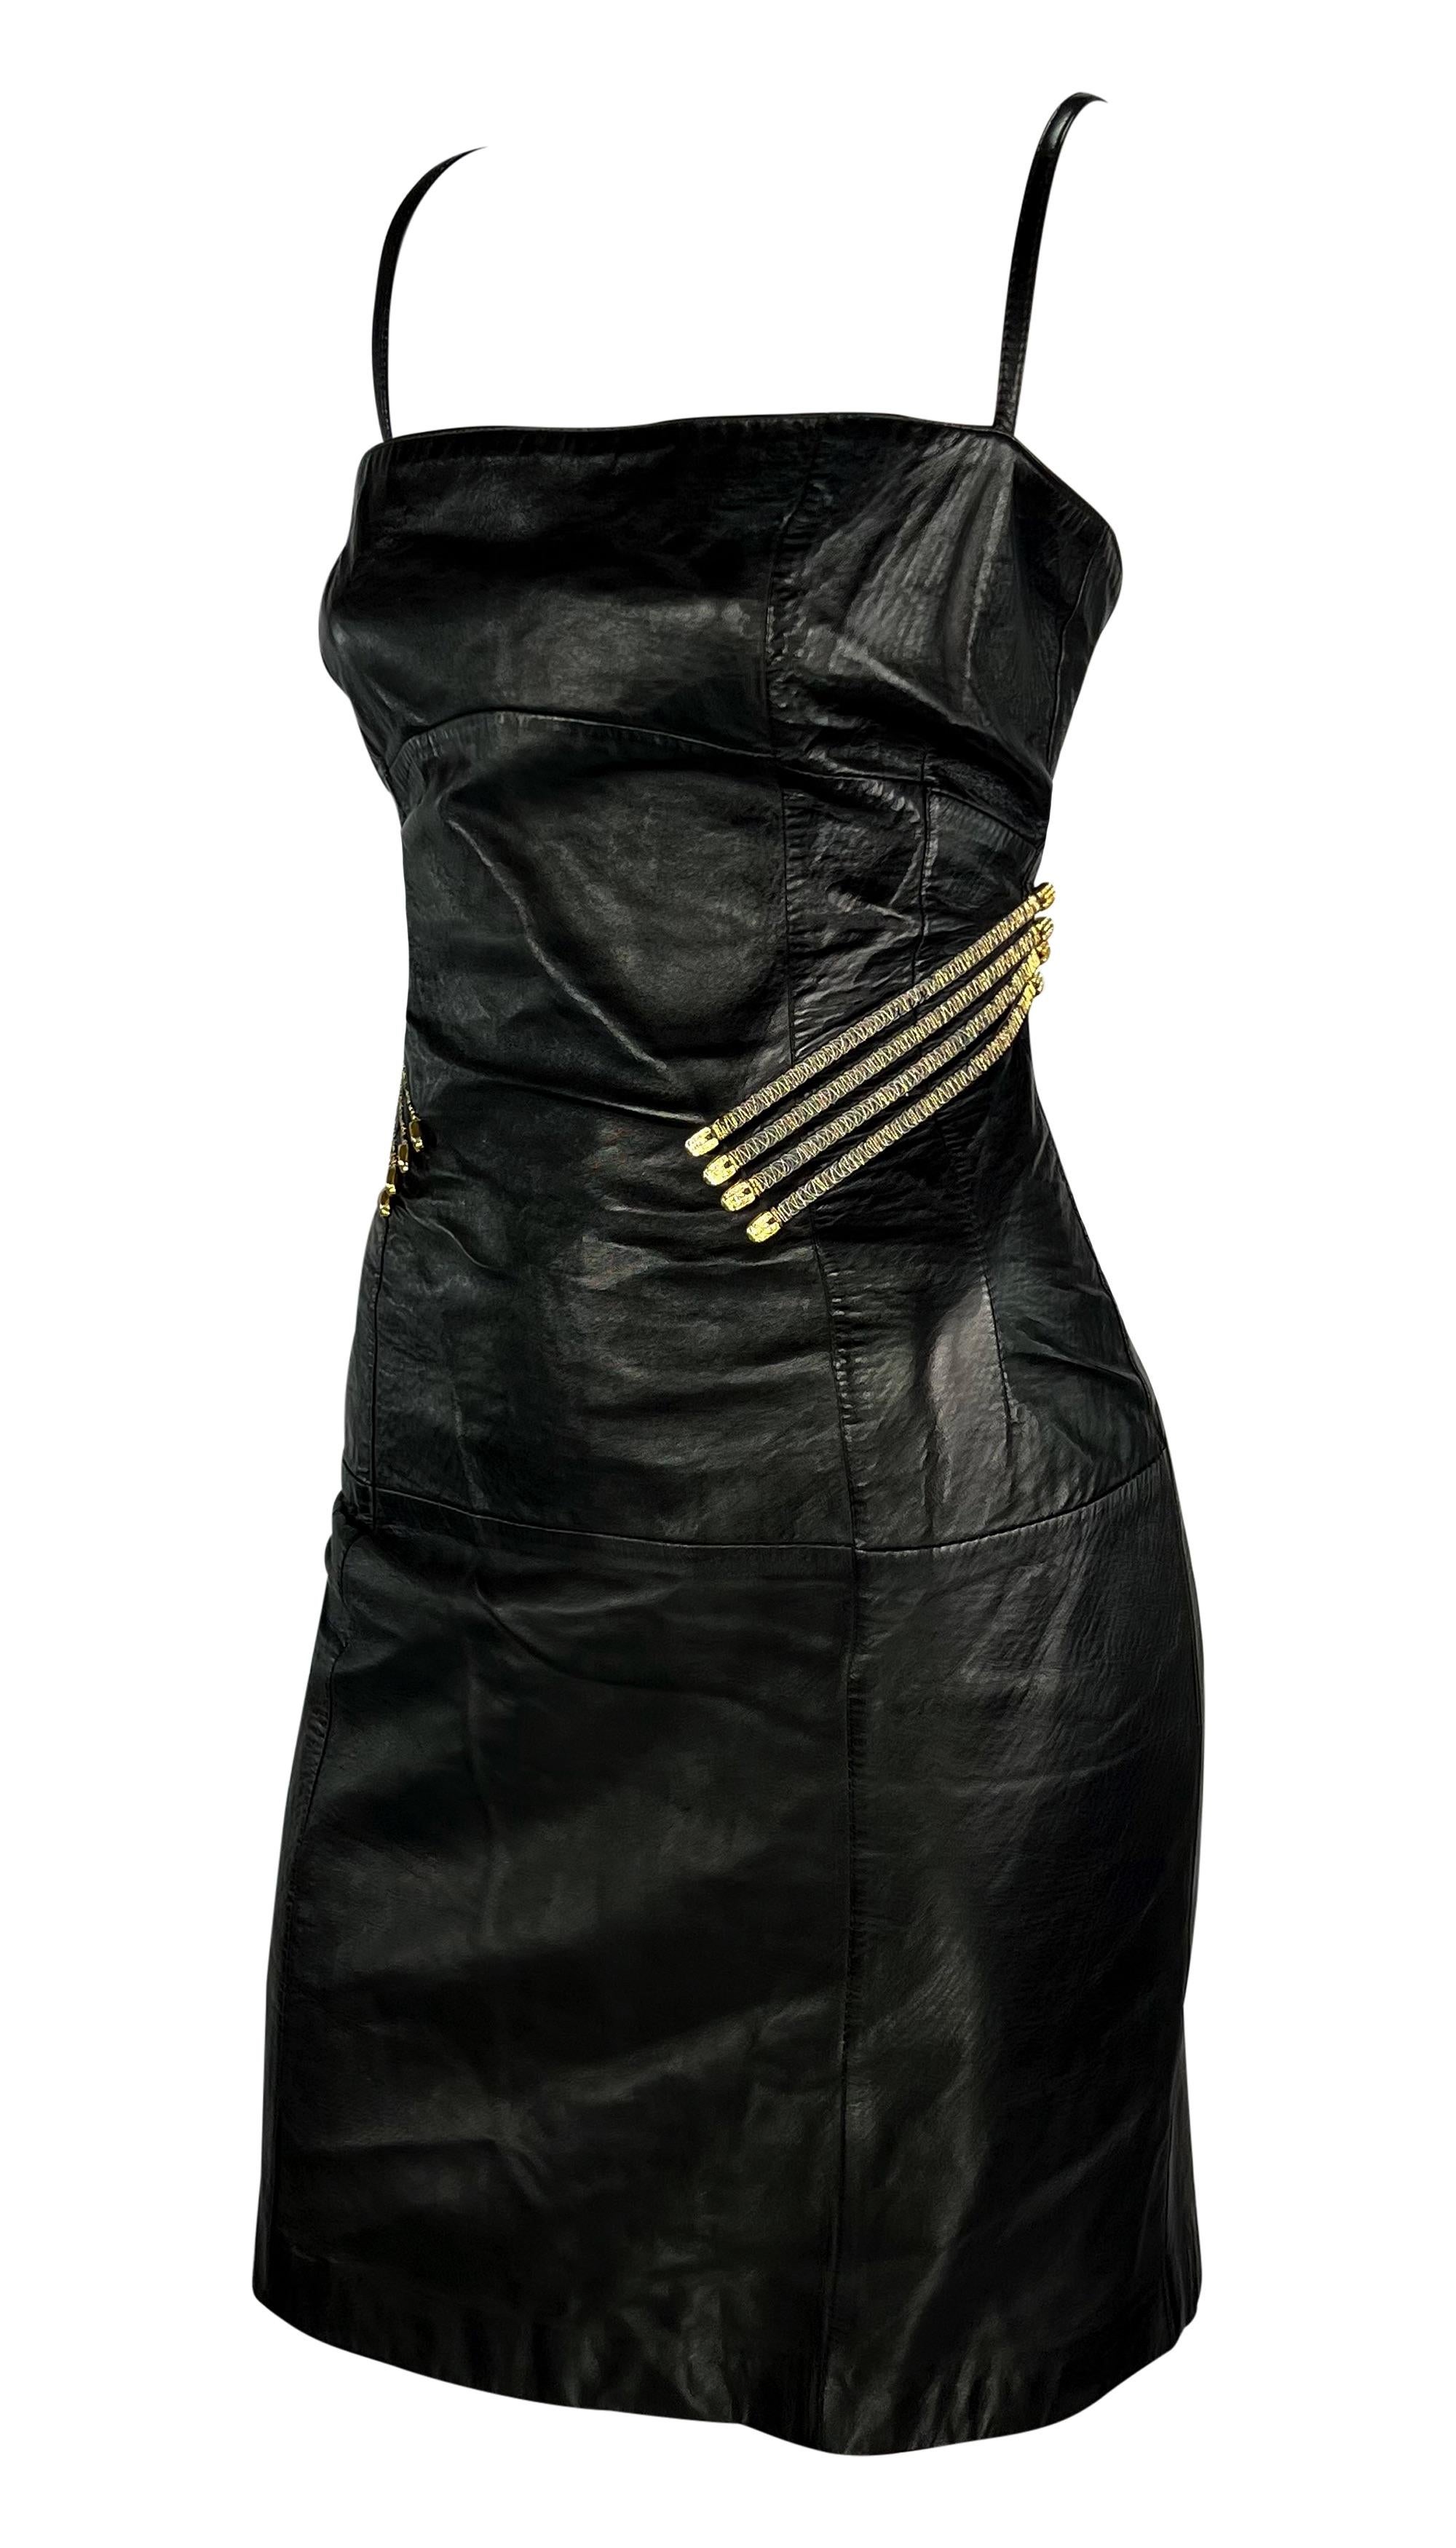 S/S 1995 Gianfranco Ferré Rhinestone Gold Corset Boned Black Leather Mini Dress For Sale 1